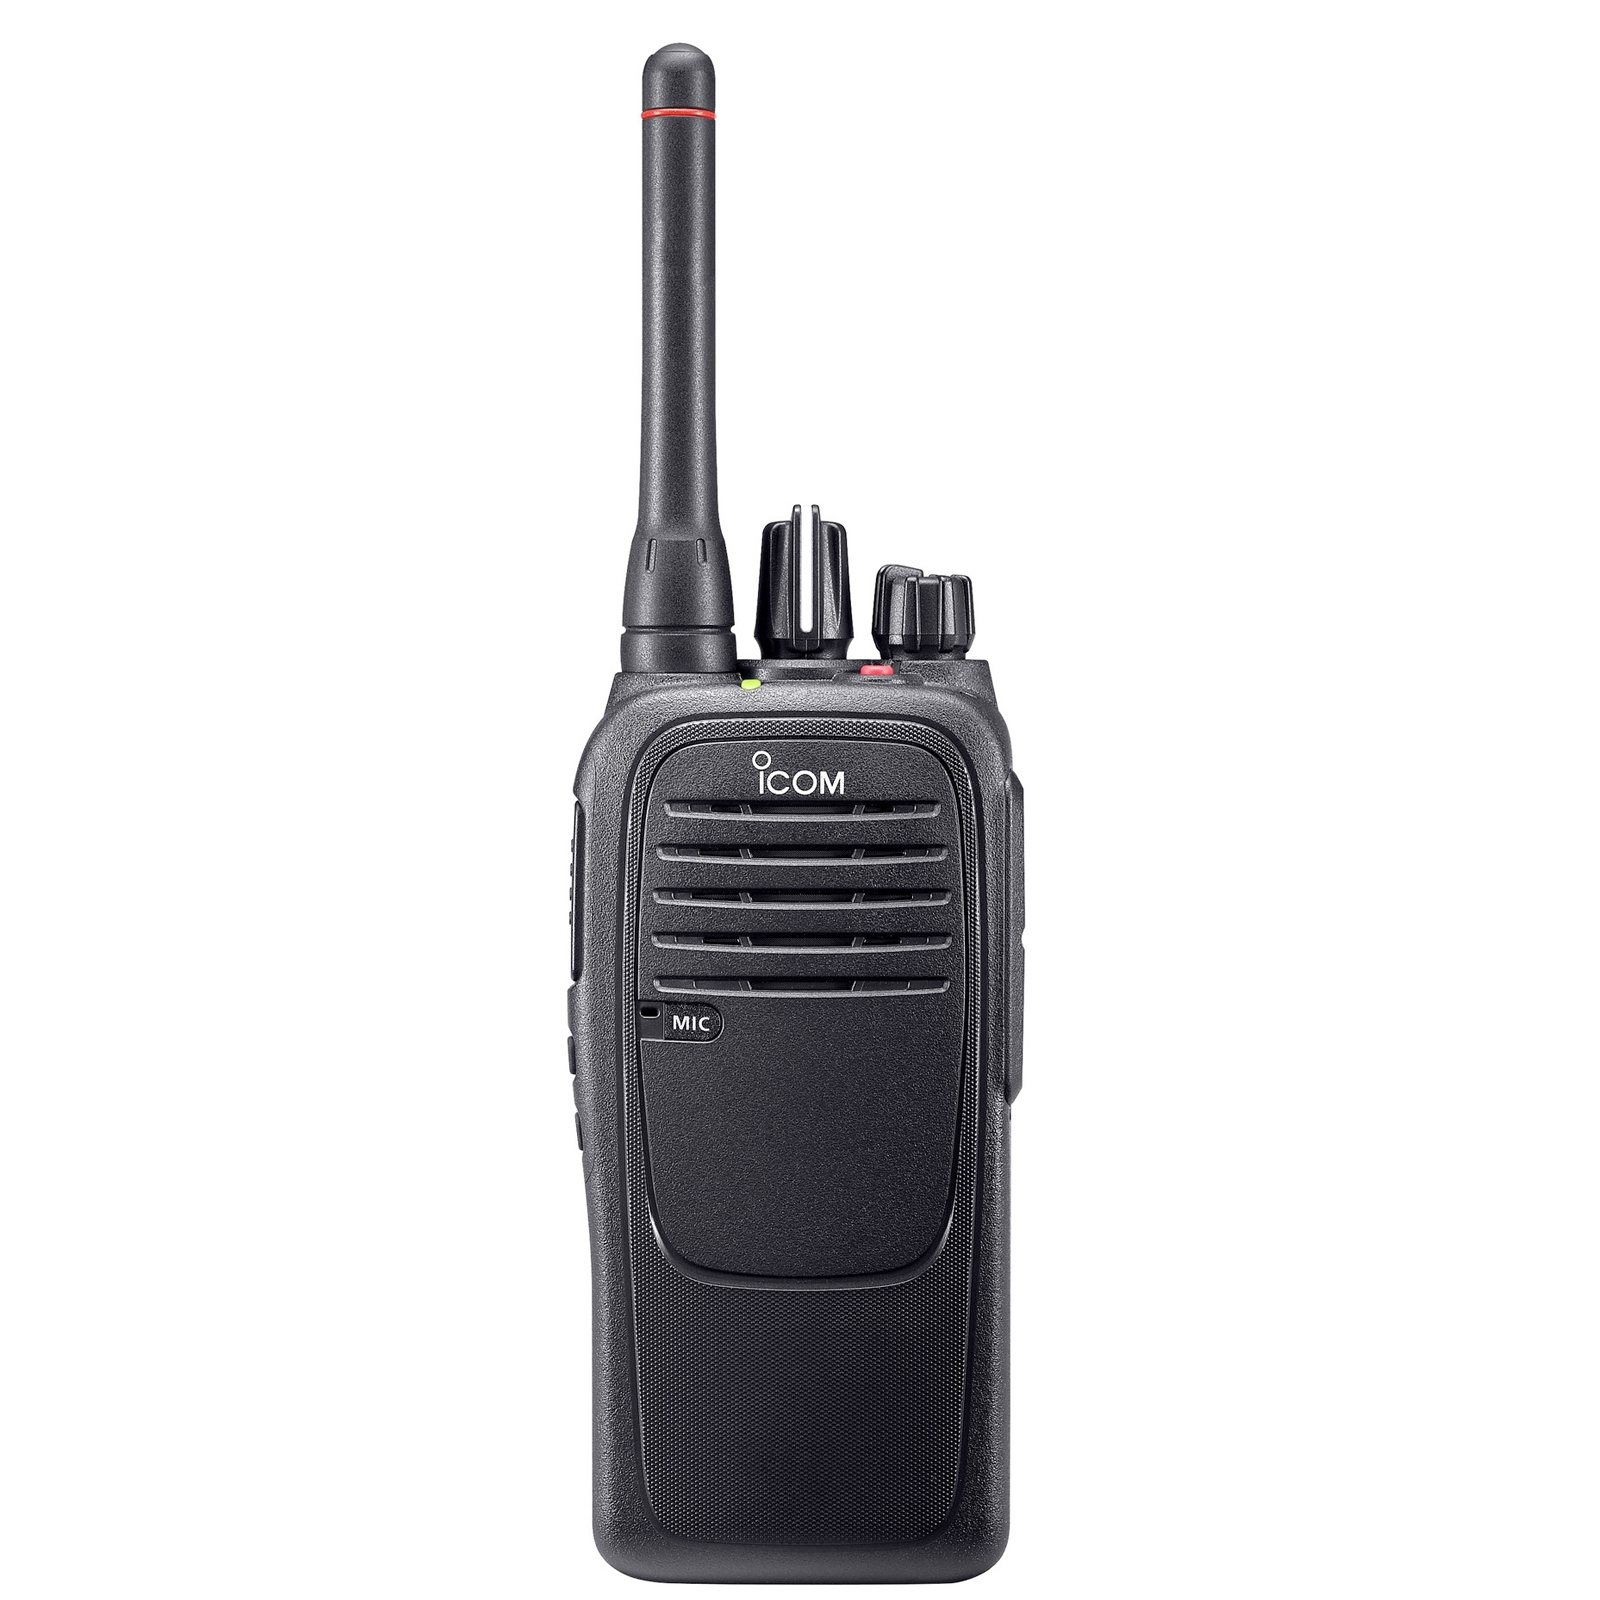 Telestar System Telecomunicazioni Roma Radio Portatili analogiche licenziate ICOM Serie IC-F1000 IC-F2000